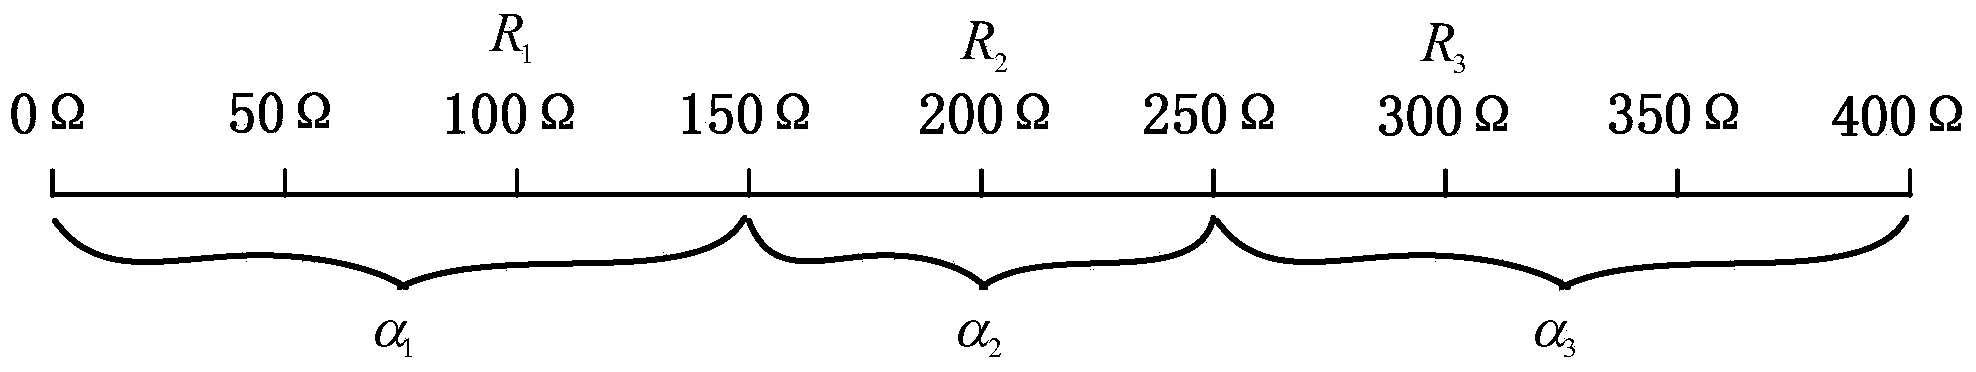 Calibration method for digital multimeter